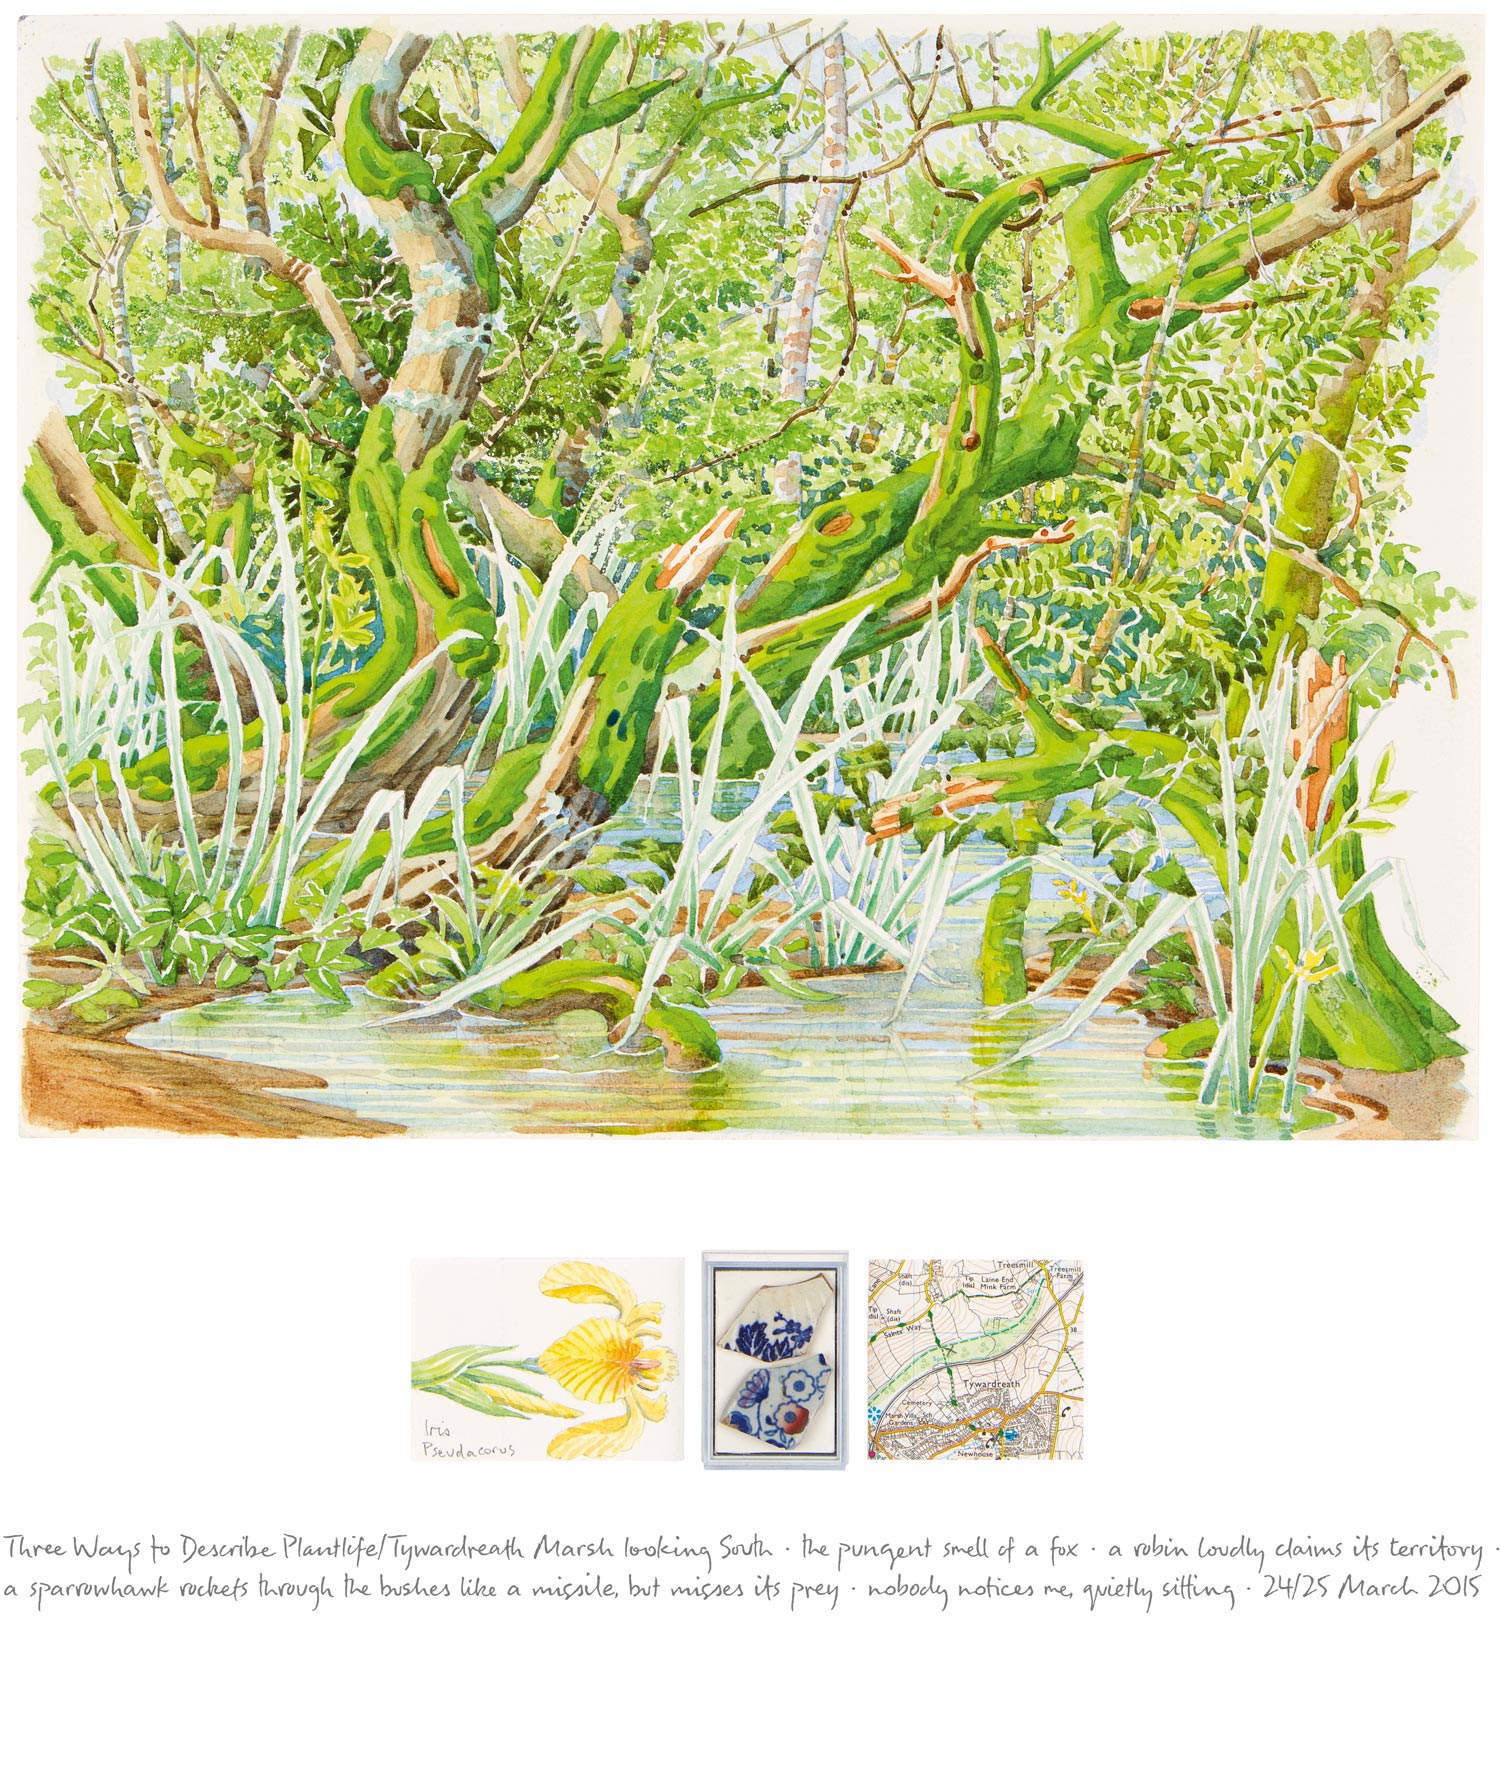   Tony Foster ,  Three Ways to Describe Plantlife / Three Wildlife Observations—Tywardreath Marsh Looking South , 2015 